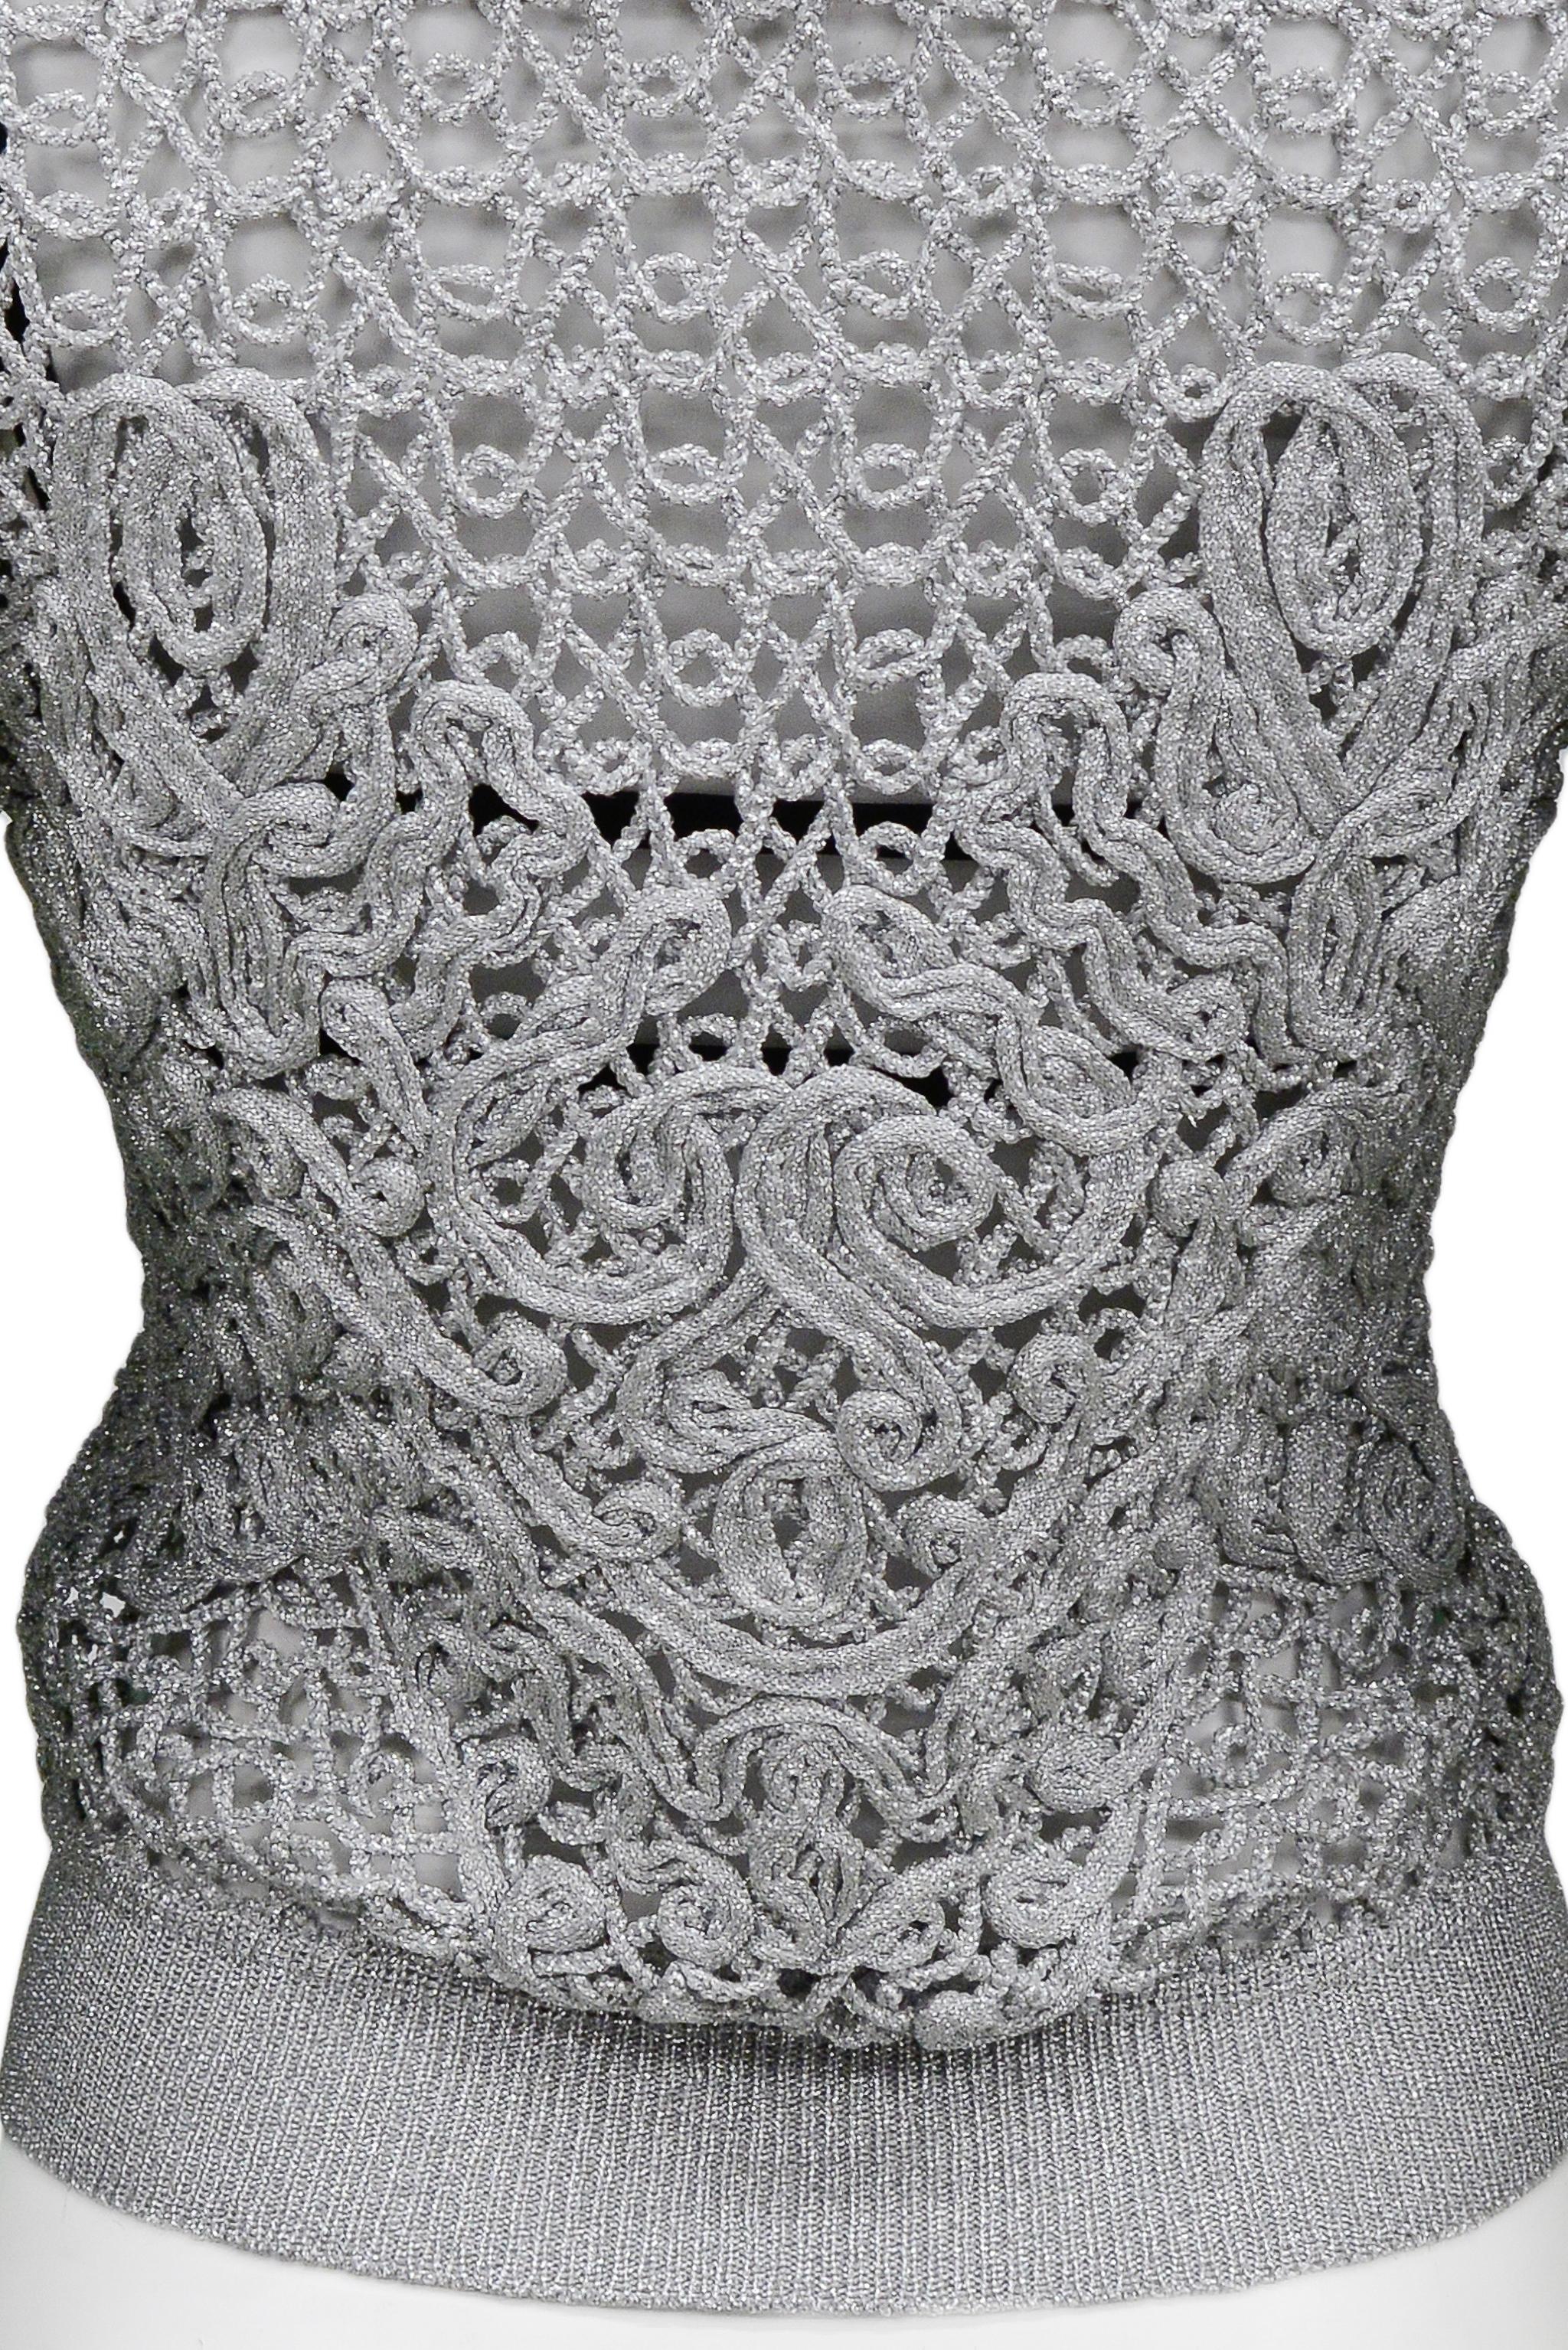 Valentino Silver Crochet Cardigan With Fur Collar & Bikini Top 2004 For Sale 2